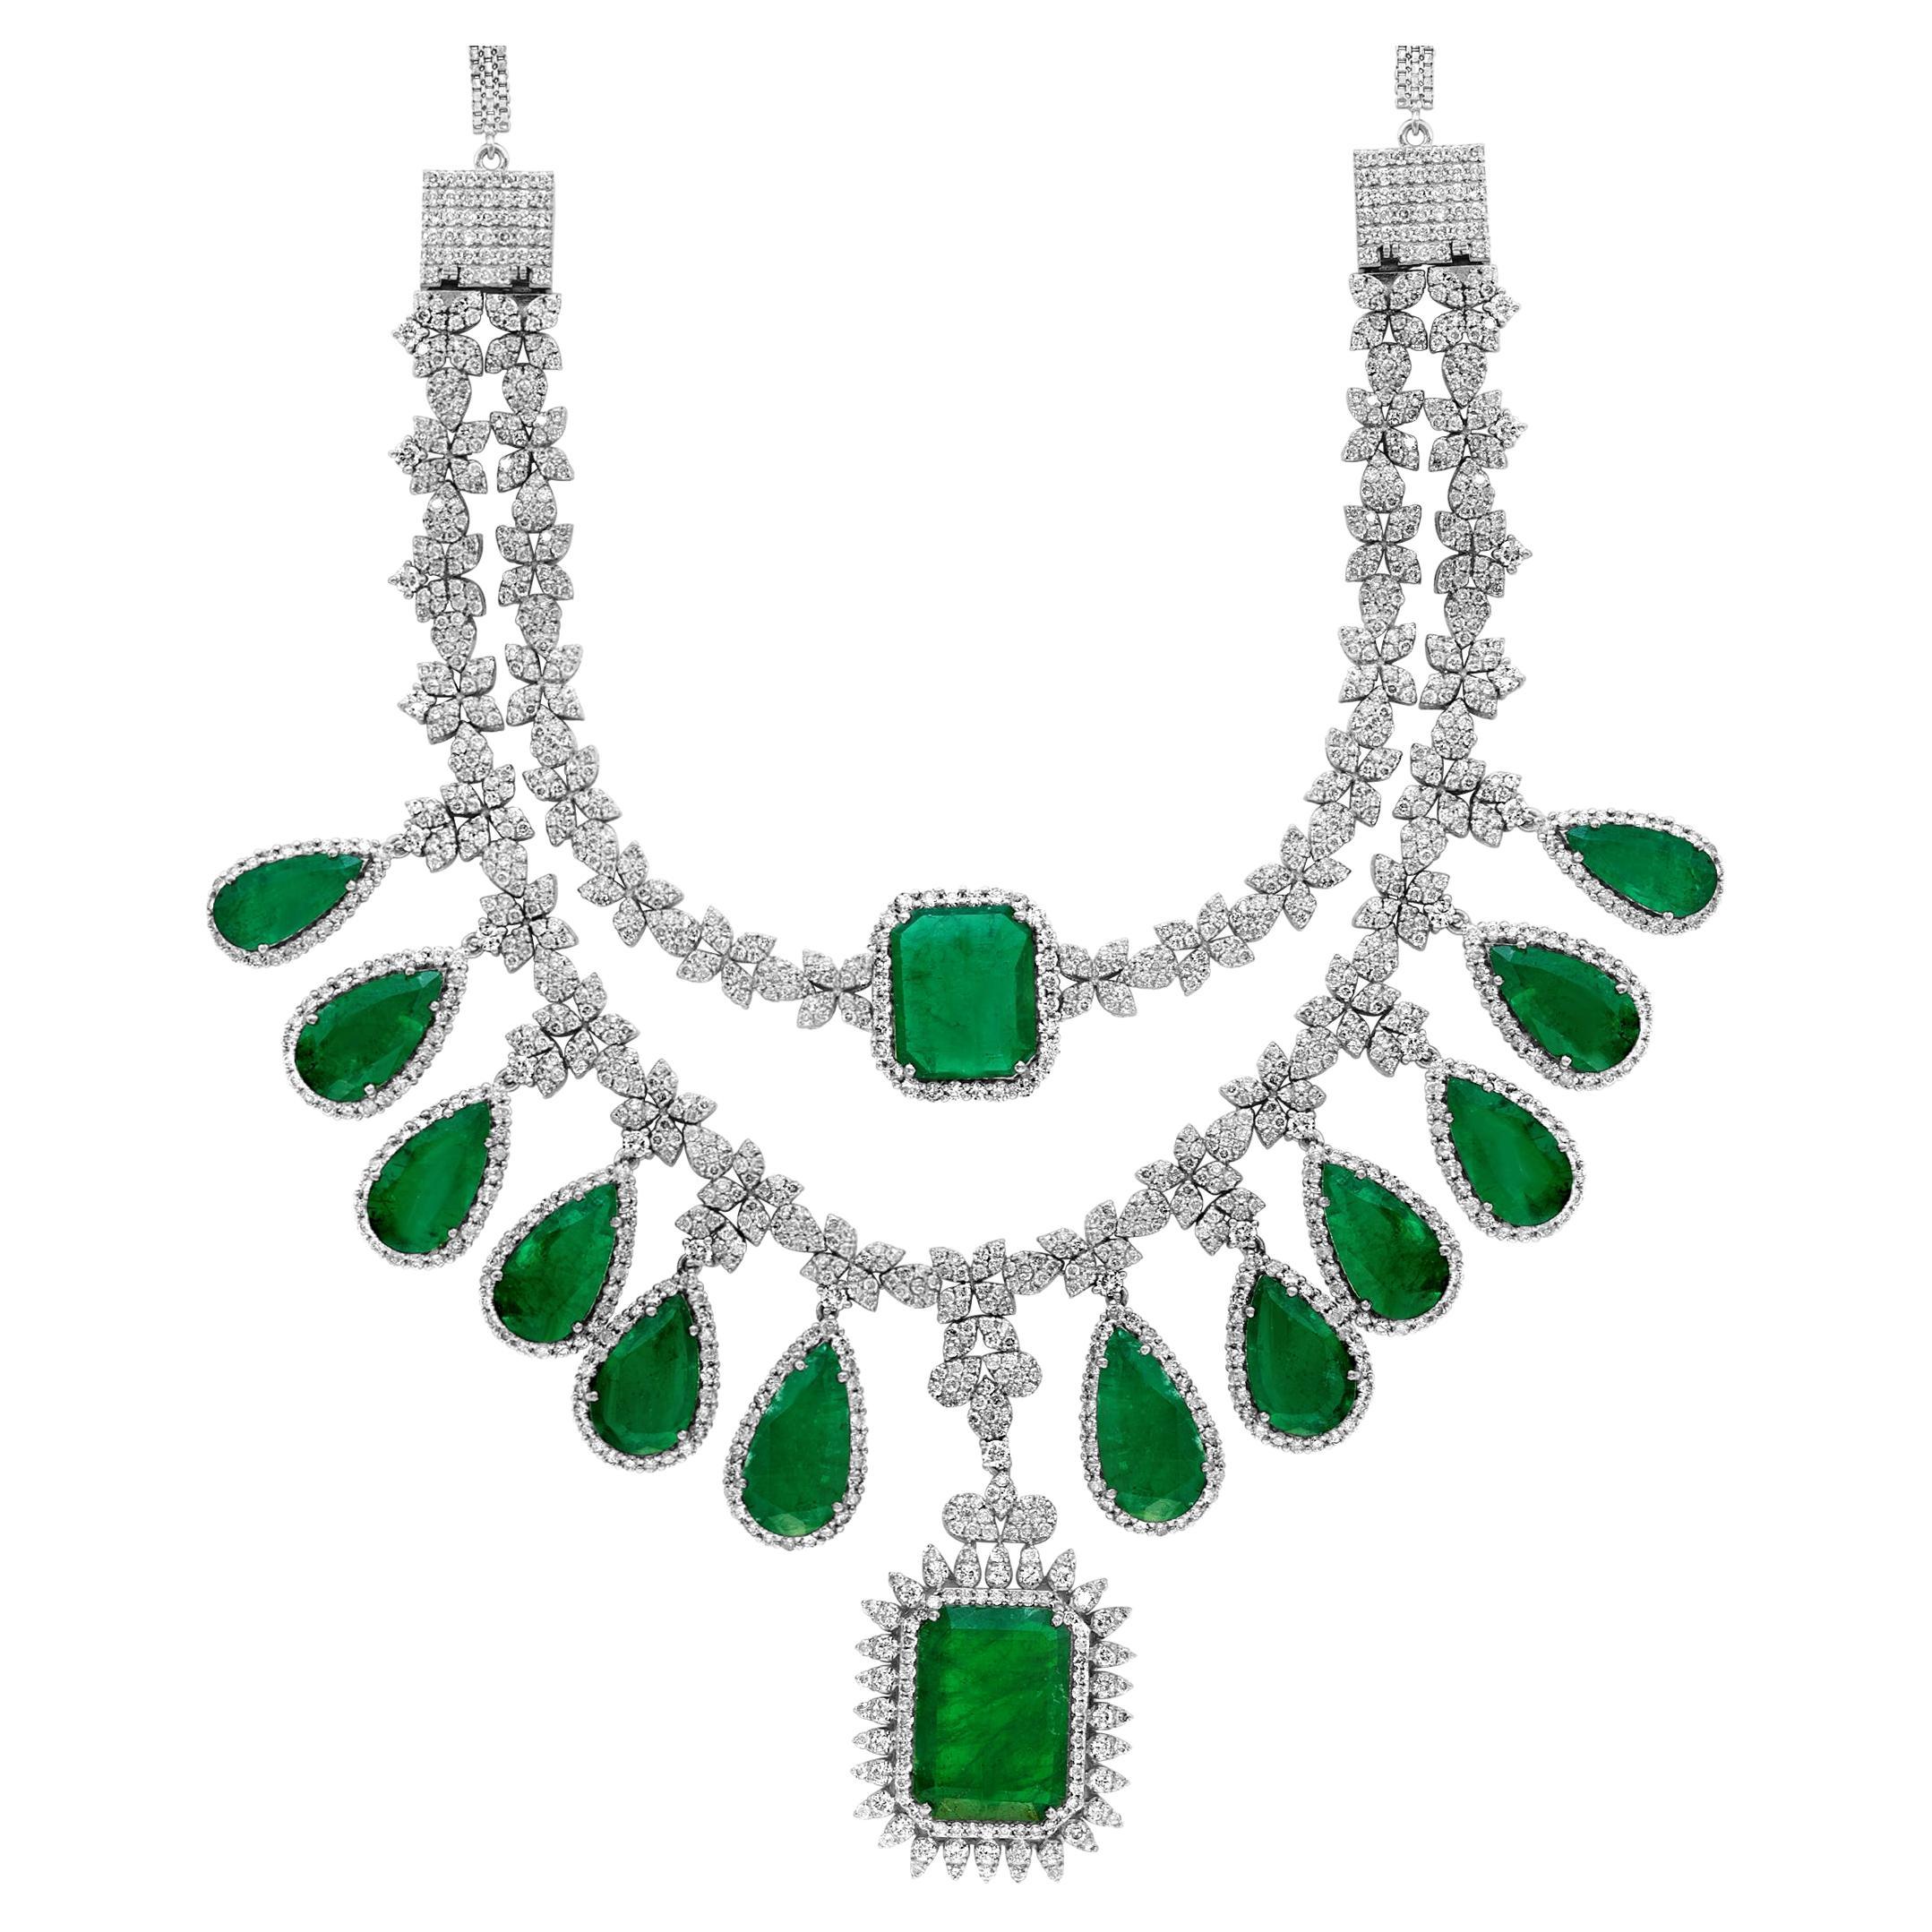 80 Ct solitaire Zambian Emerald & 25Ct Diamond Fringe Necklace detachable layers